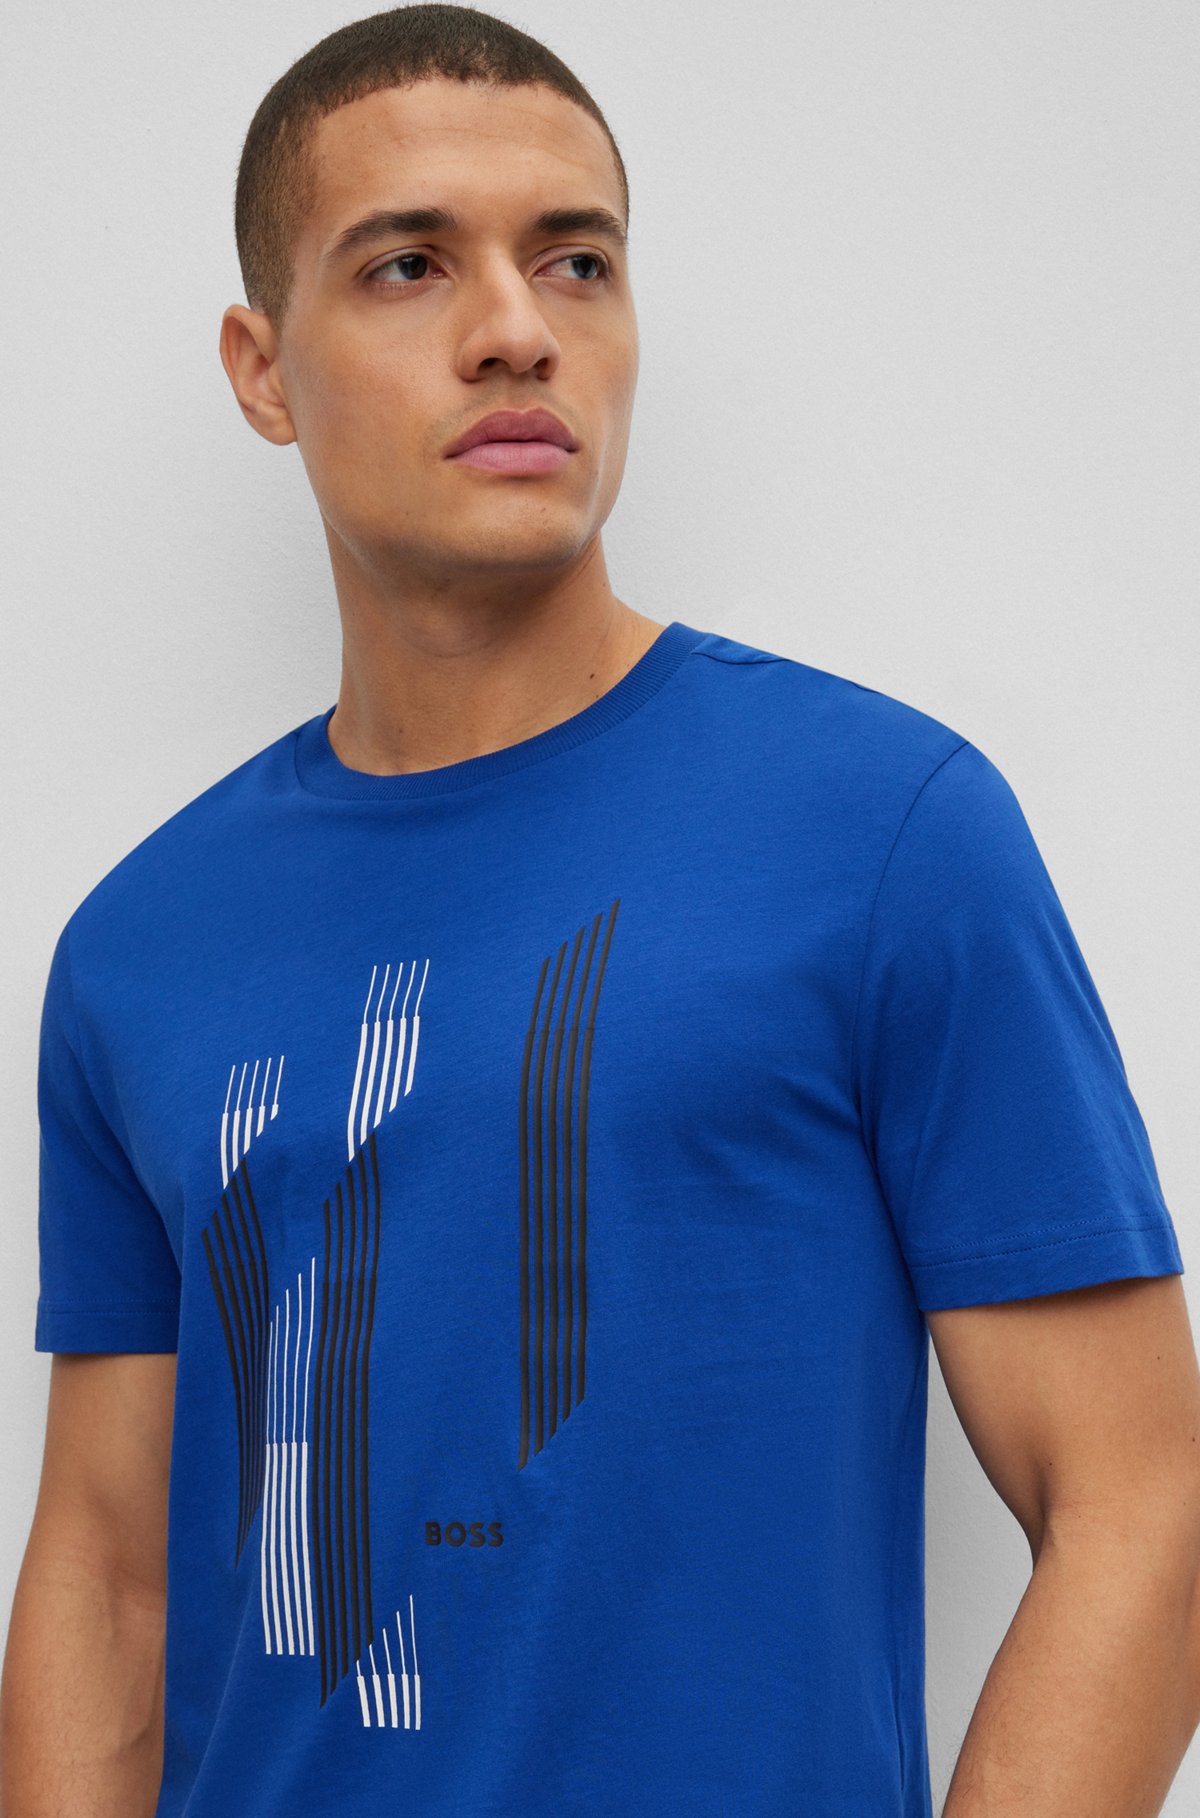 Cotton-jersey T-shirt with seasonal artwork, Blue